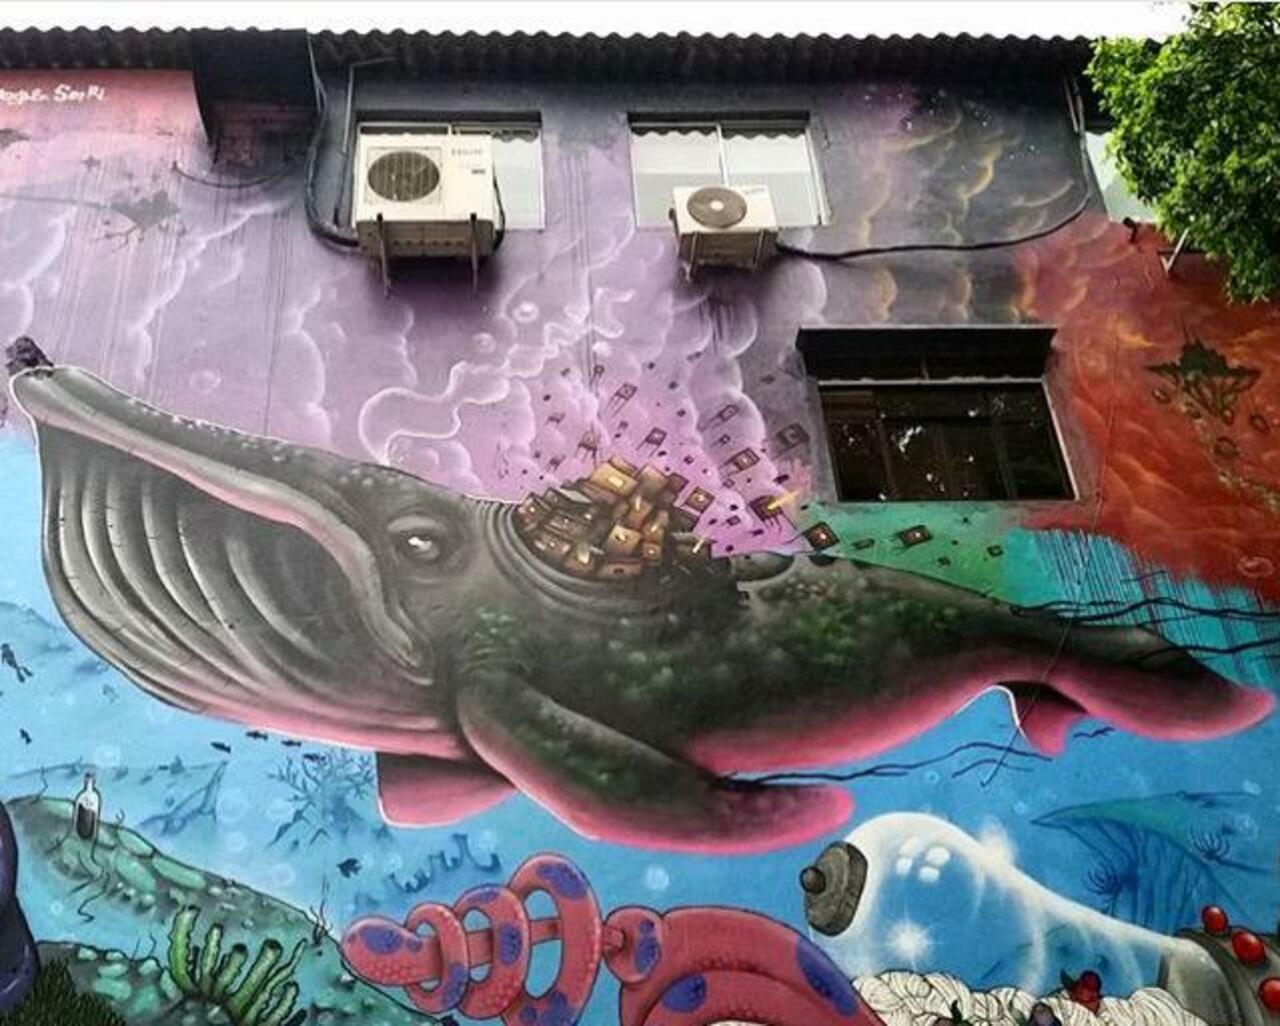 Street Art by joks_johnes Pinheiros, São Paulo 

#art #mural #graffiti #streetart http://t.co/j6joGvmRqp